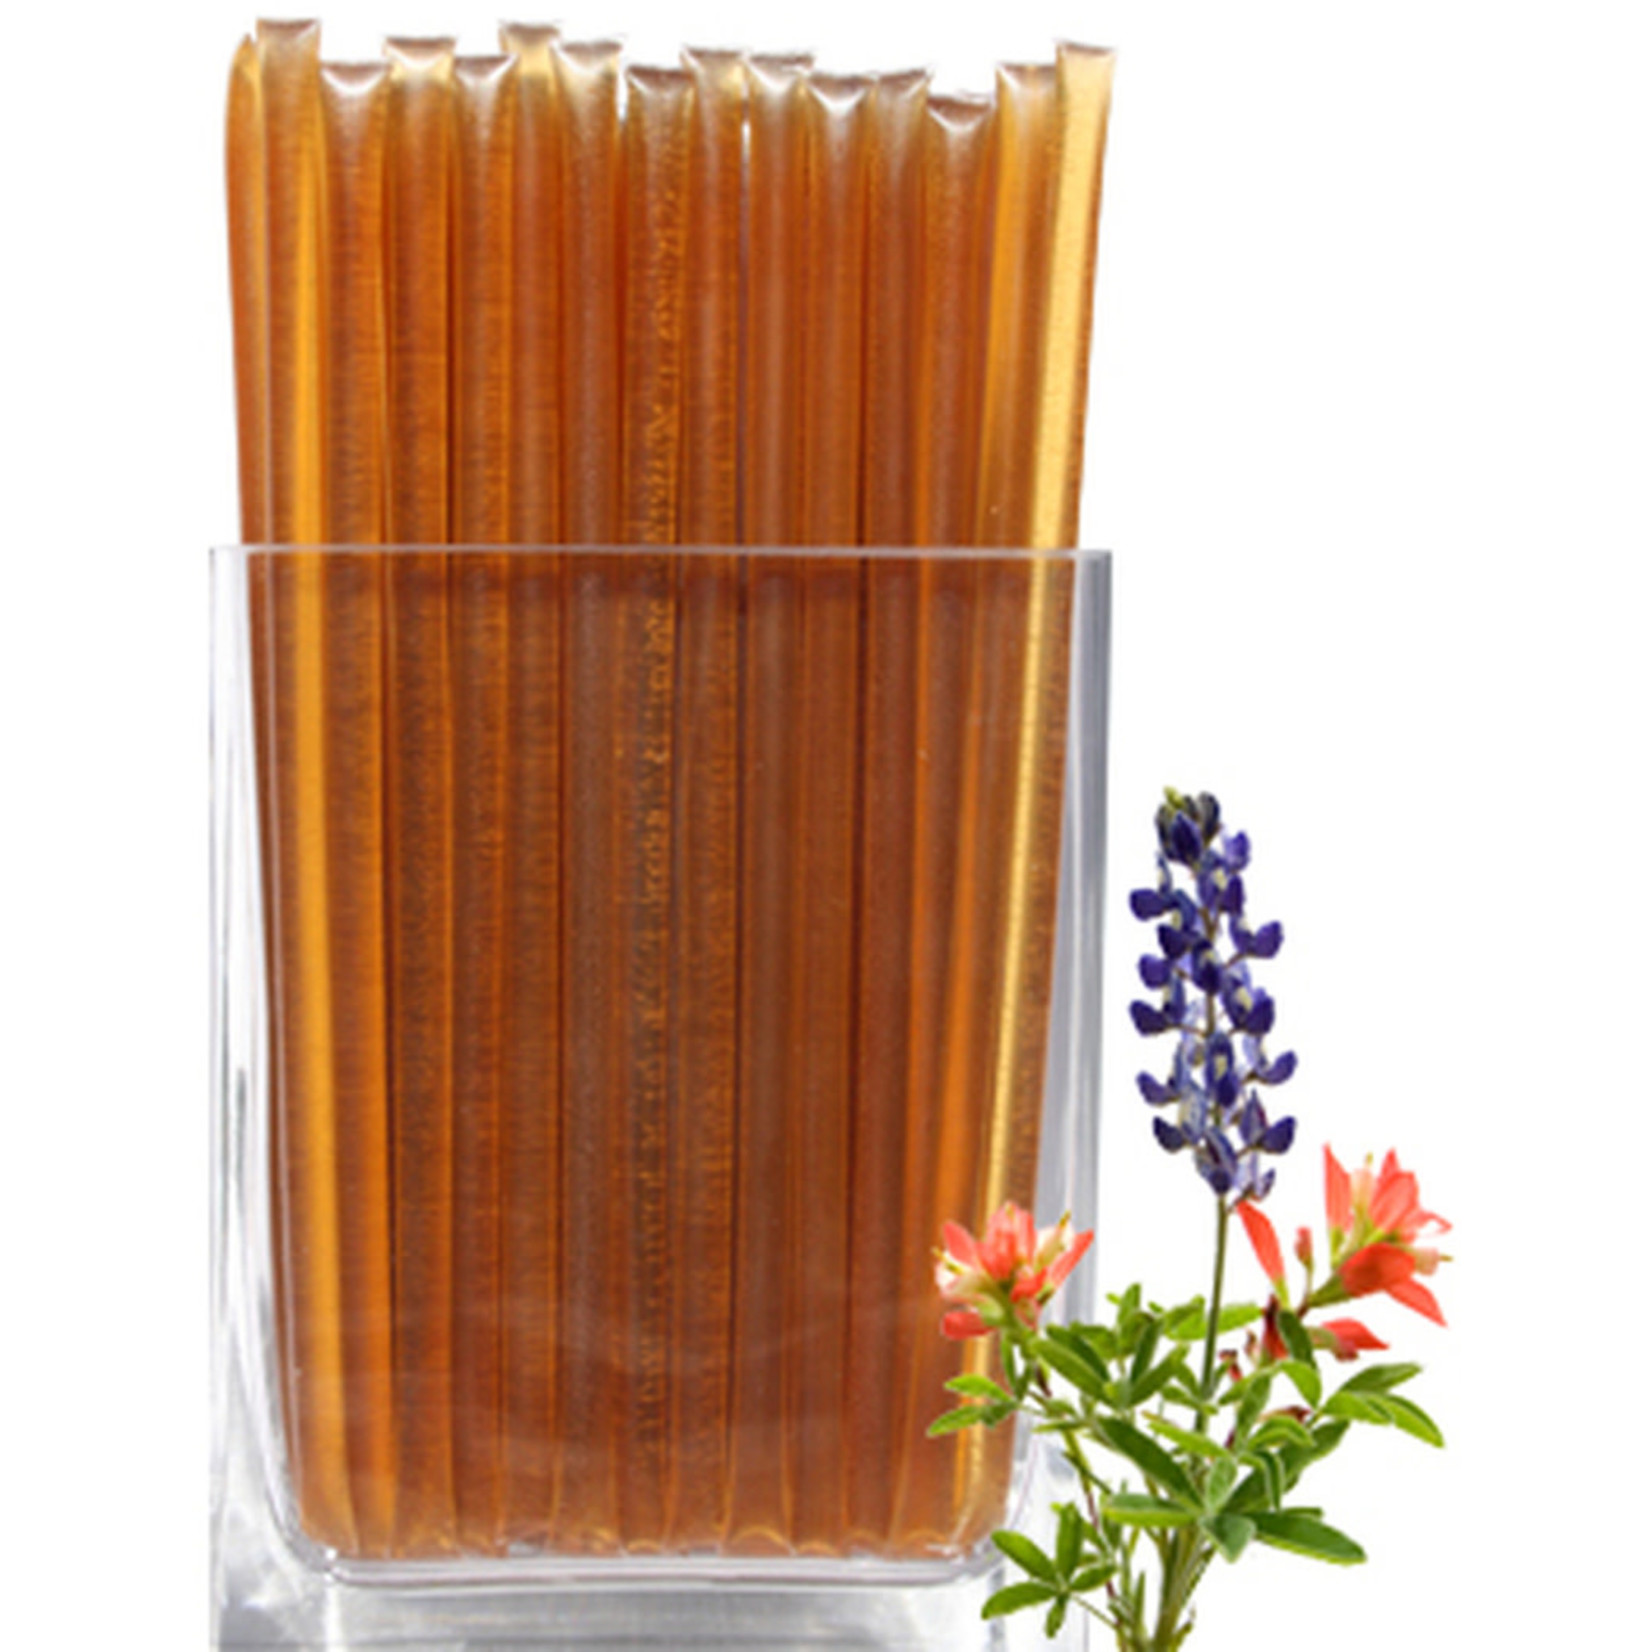 Honey Stick, Wildflower